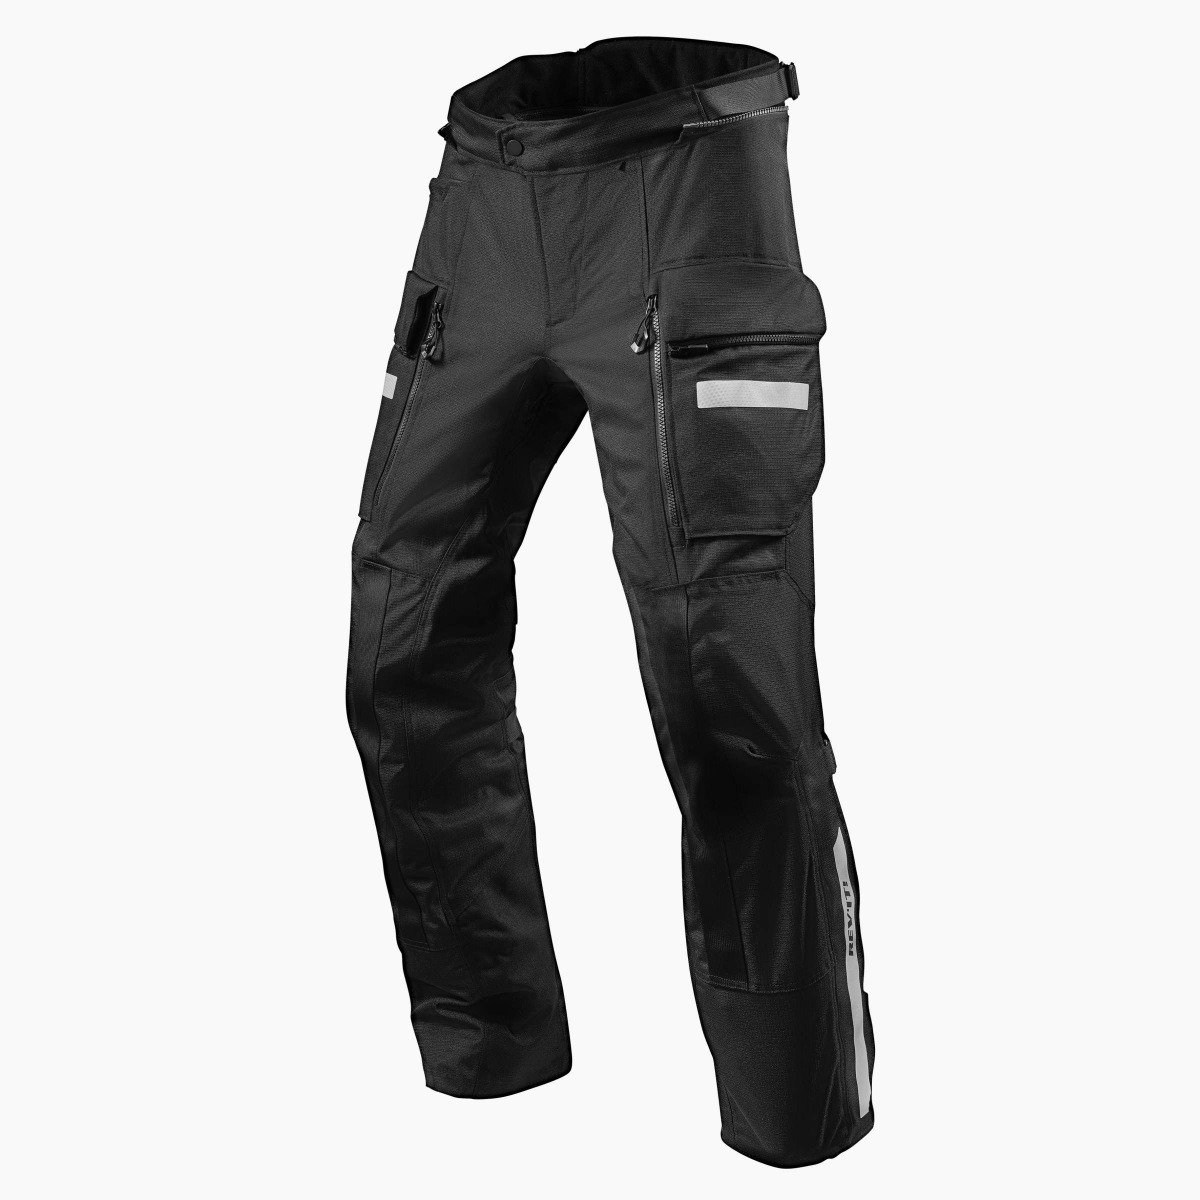 Image of REV'IT! Sand 4 H2O Short Black Motorcycle Pants Size 3XL EN